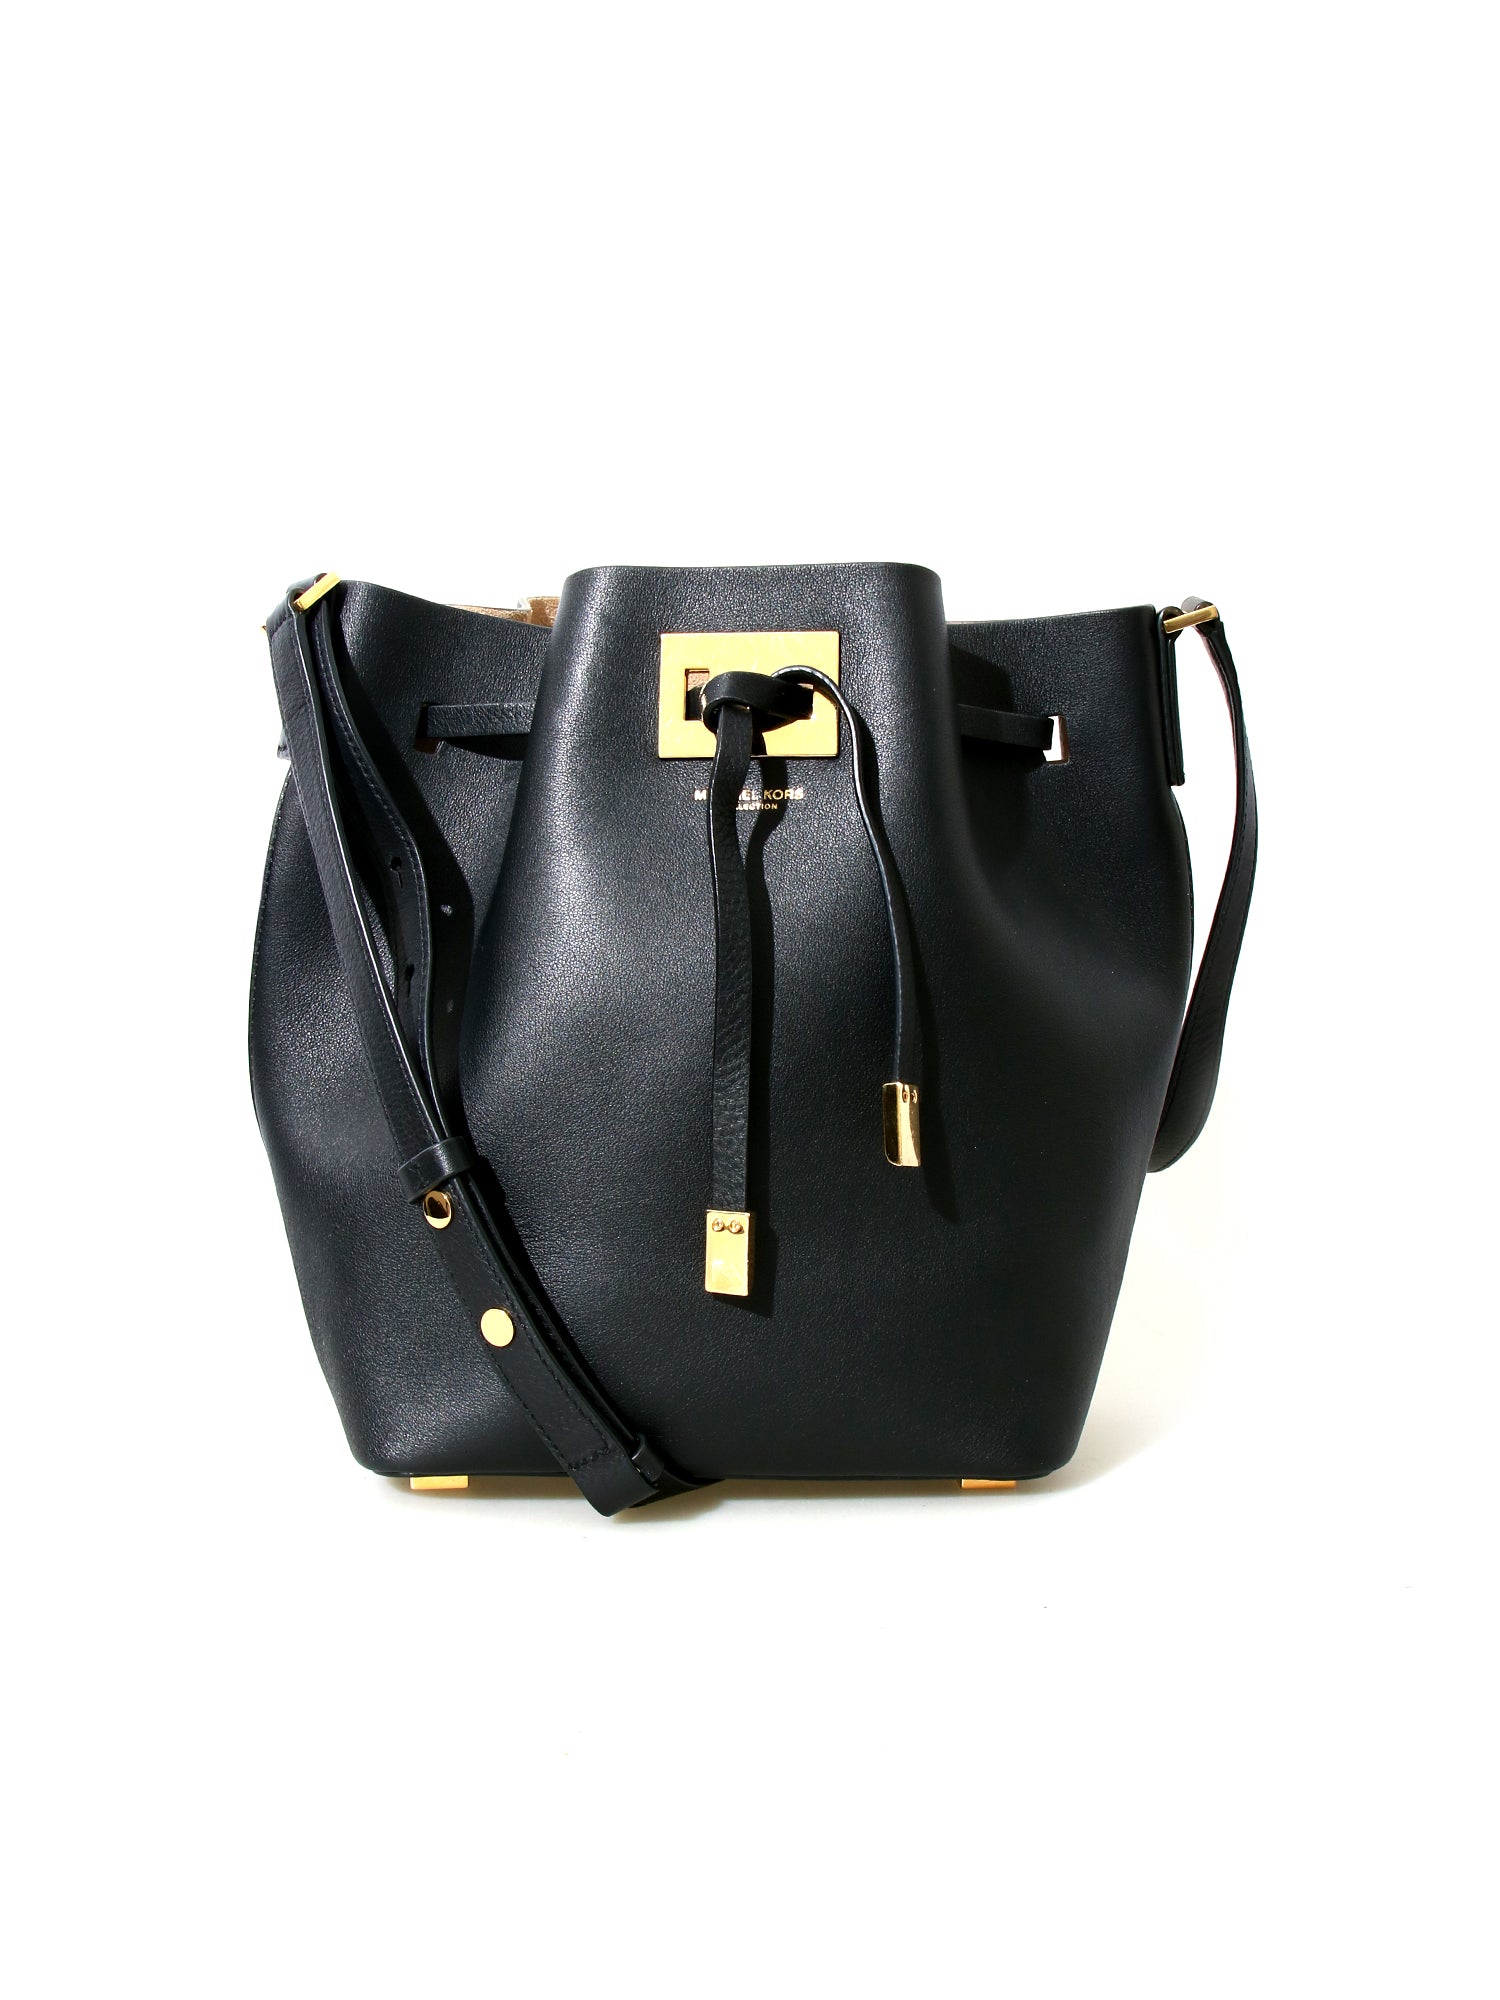 Michael Kors Collection Miranda Leather Crossbody Bucket Bag